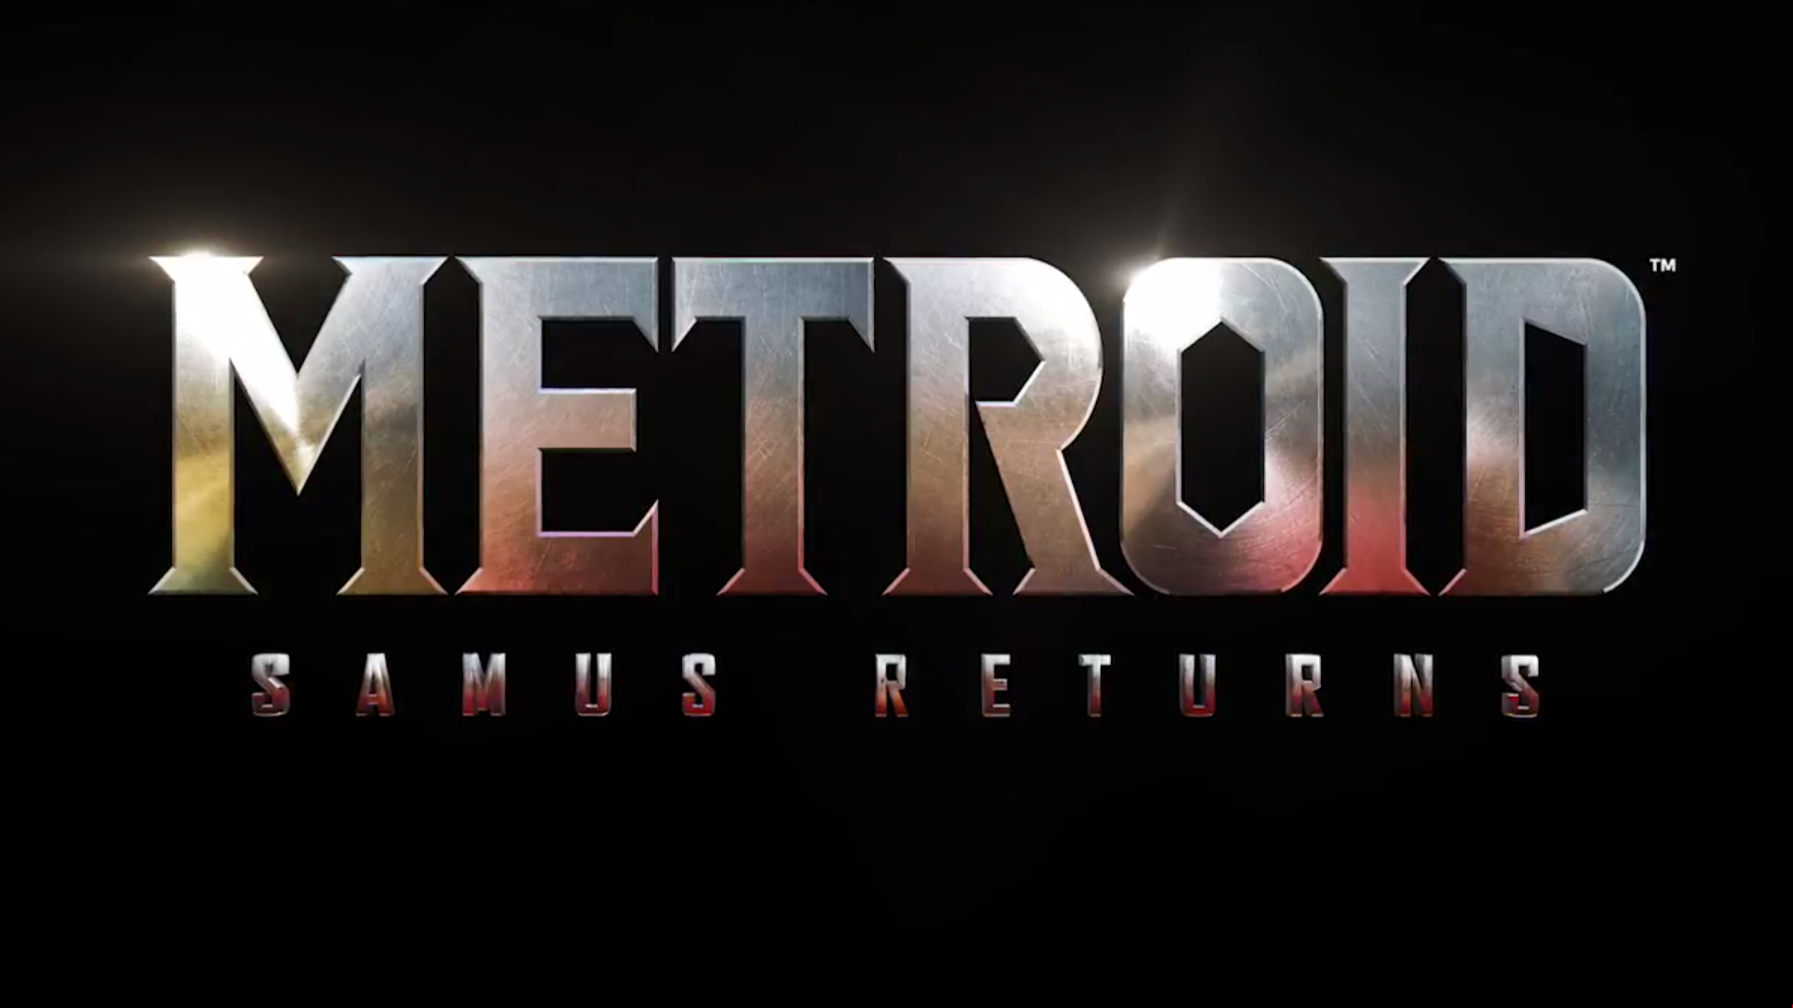 Metroid: Samus Returns